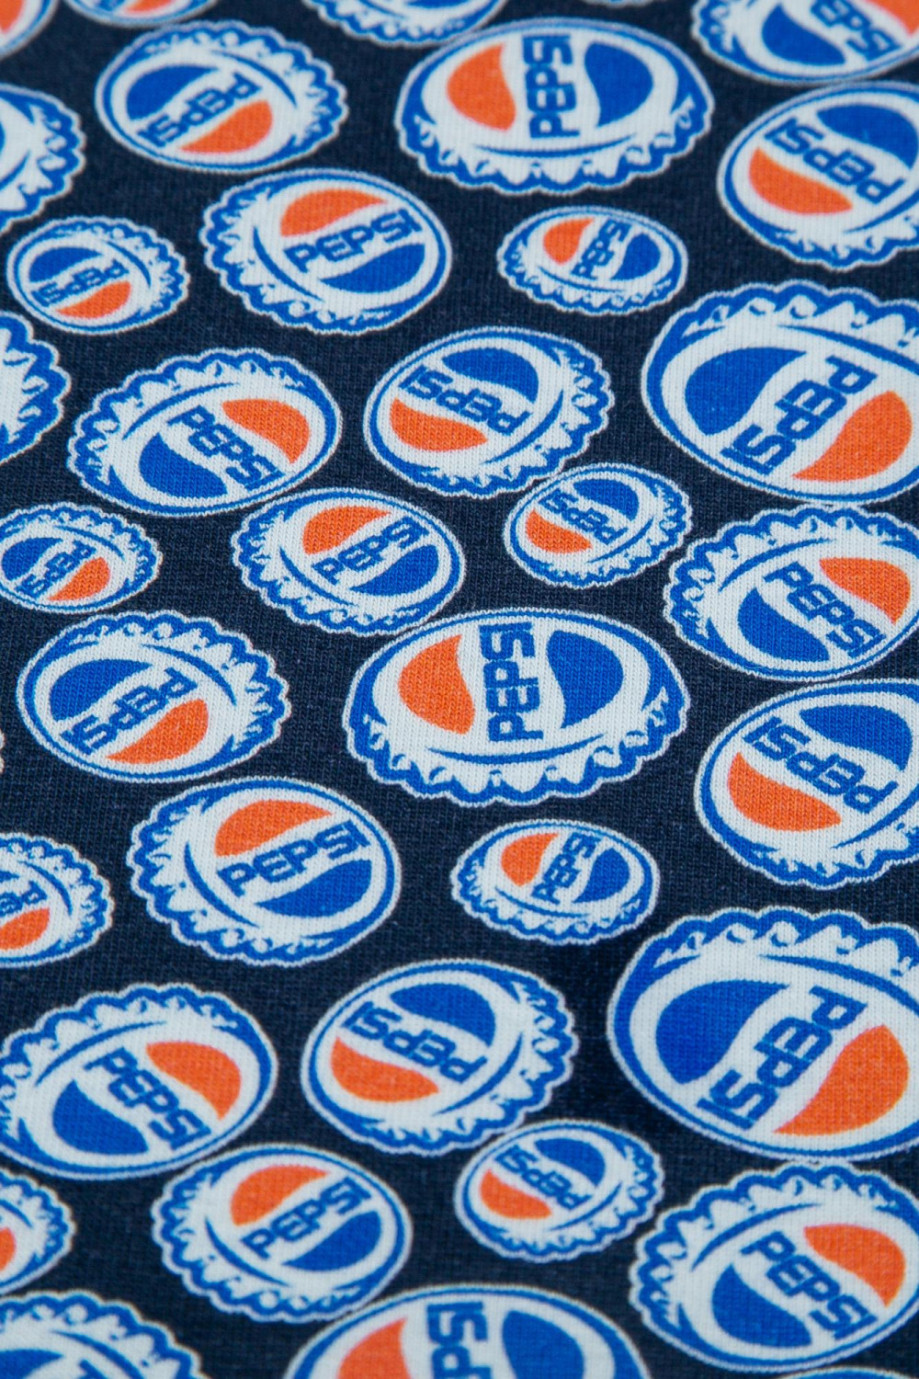 Bóxer azul intenso midway brief con diseños de Pepsi